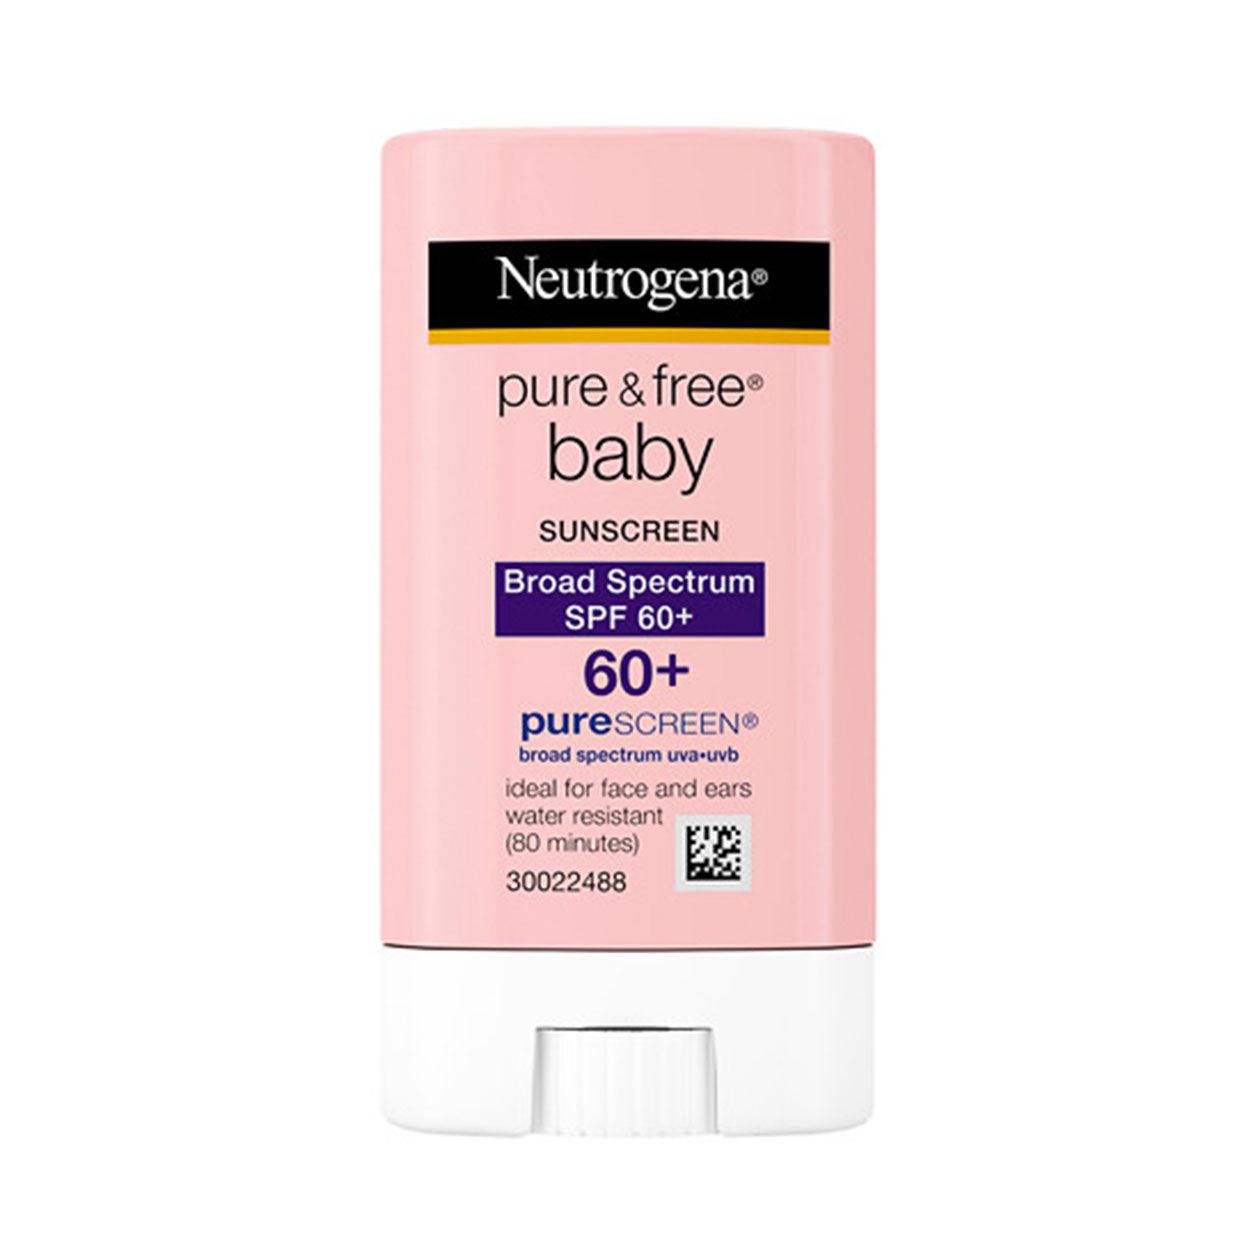 best drugstore skincare products neutrogena baby sunscreen stick